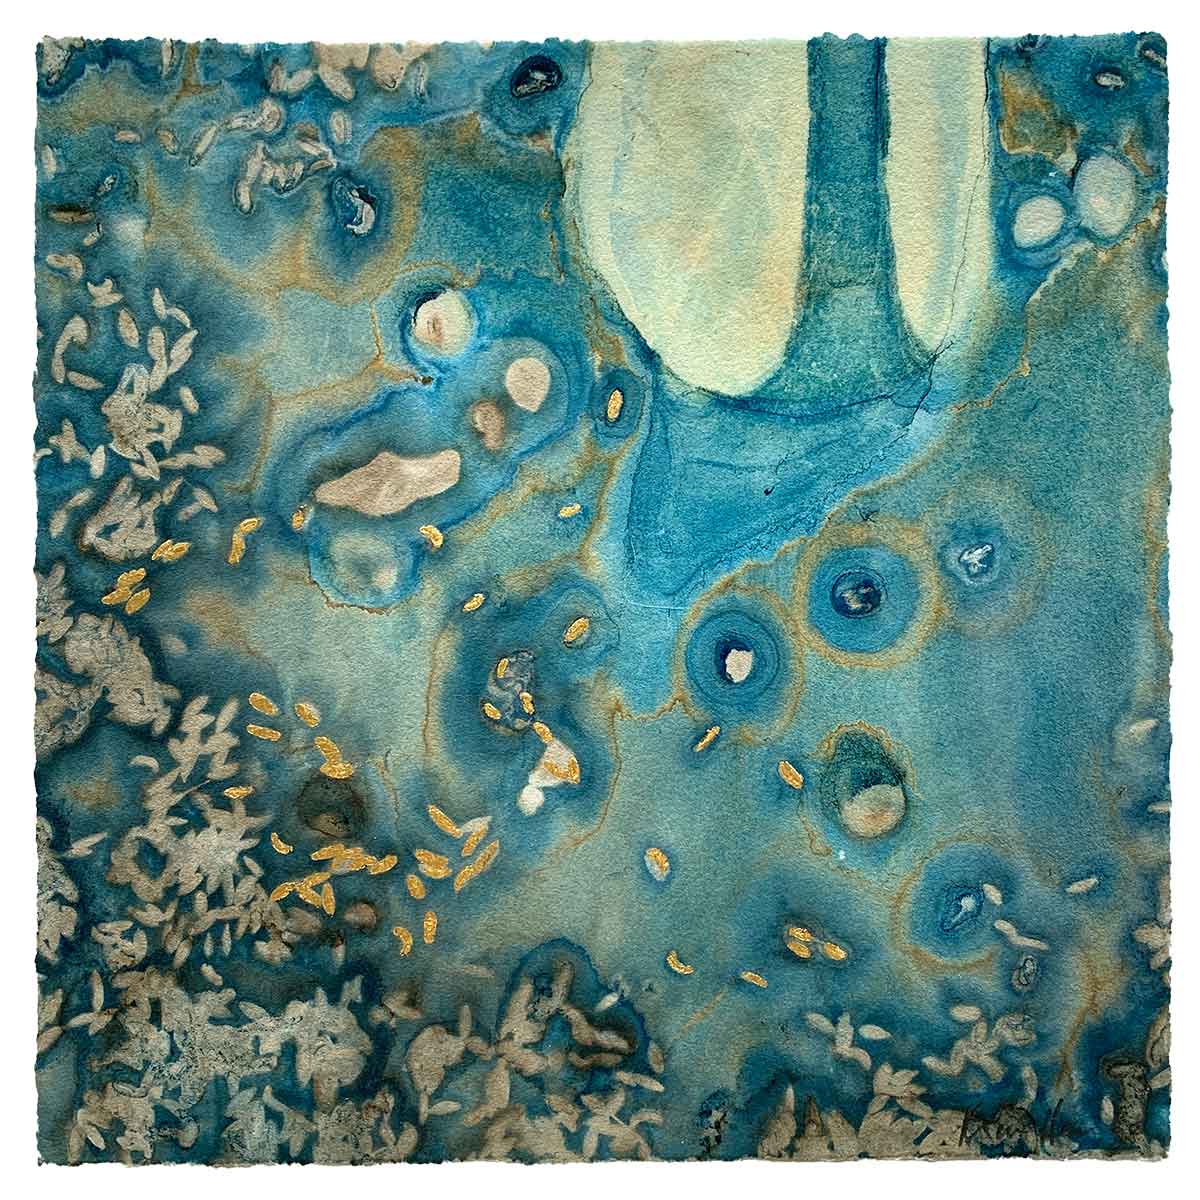 Water's Harvest 3 - Cyanotype - Kim Herringe